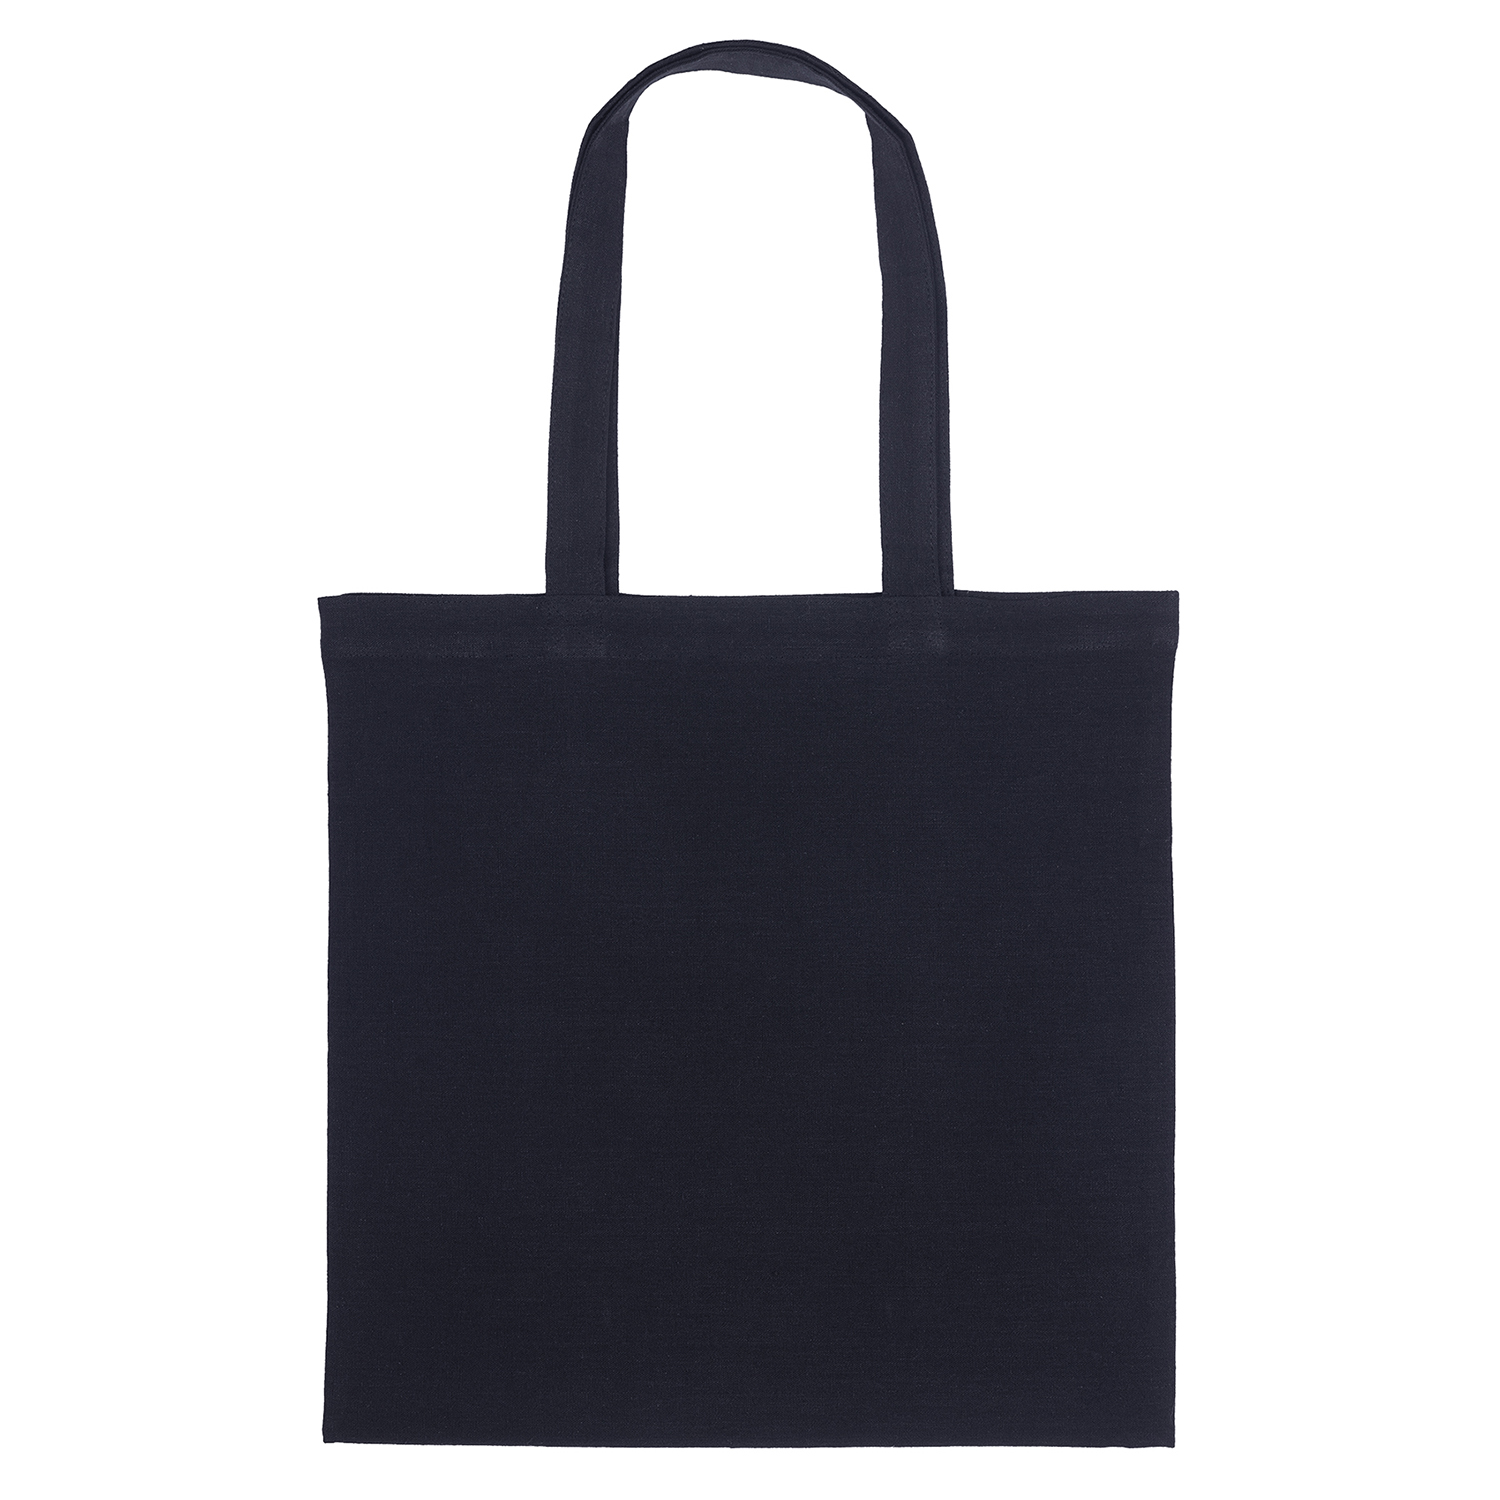 Bag Makers CVPE1515 - Custom Printed Eco-Friendly Promotional Tote Bag